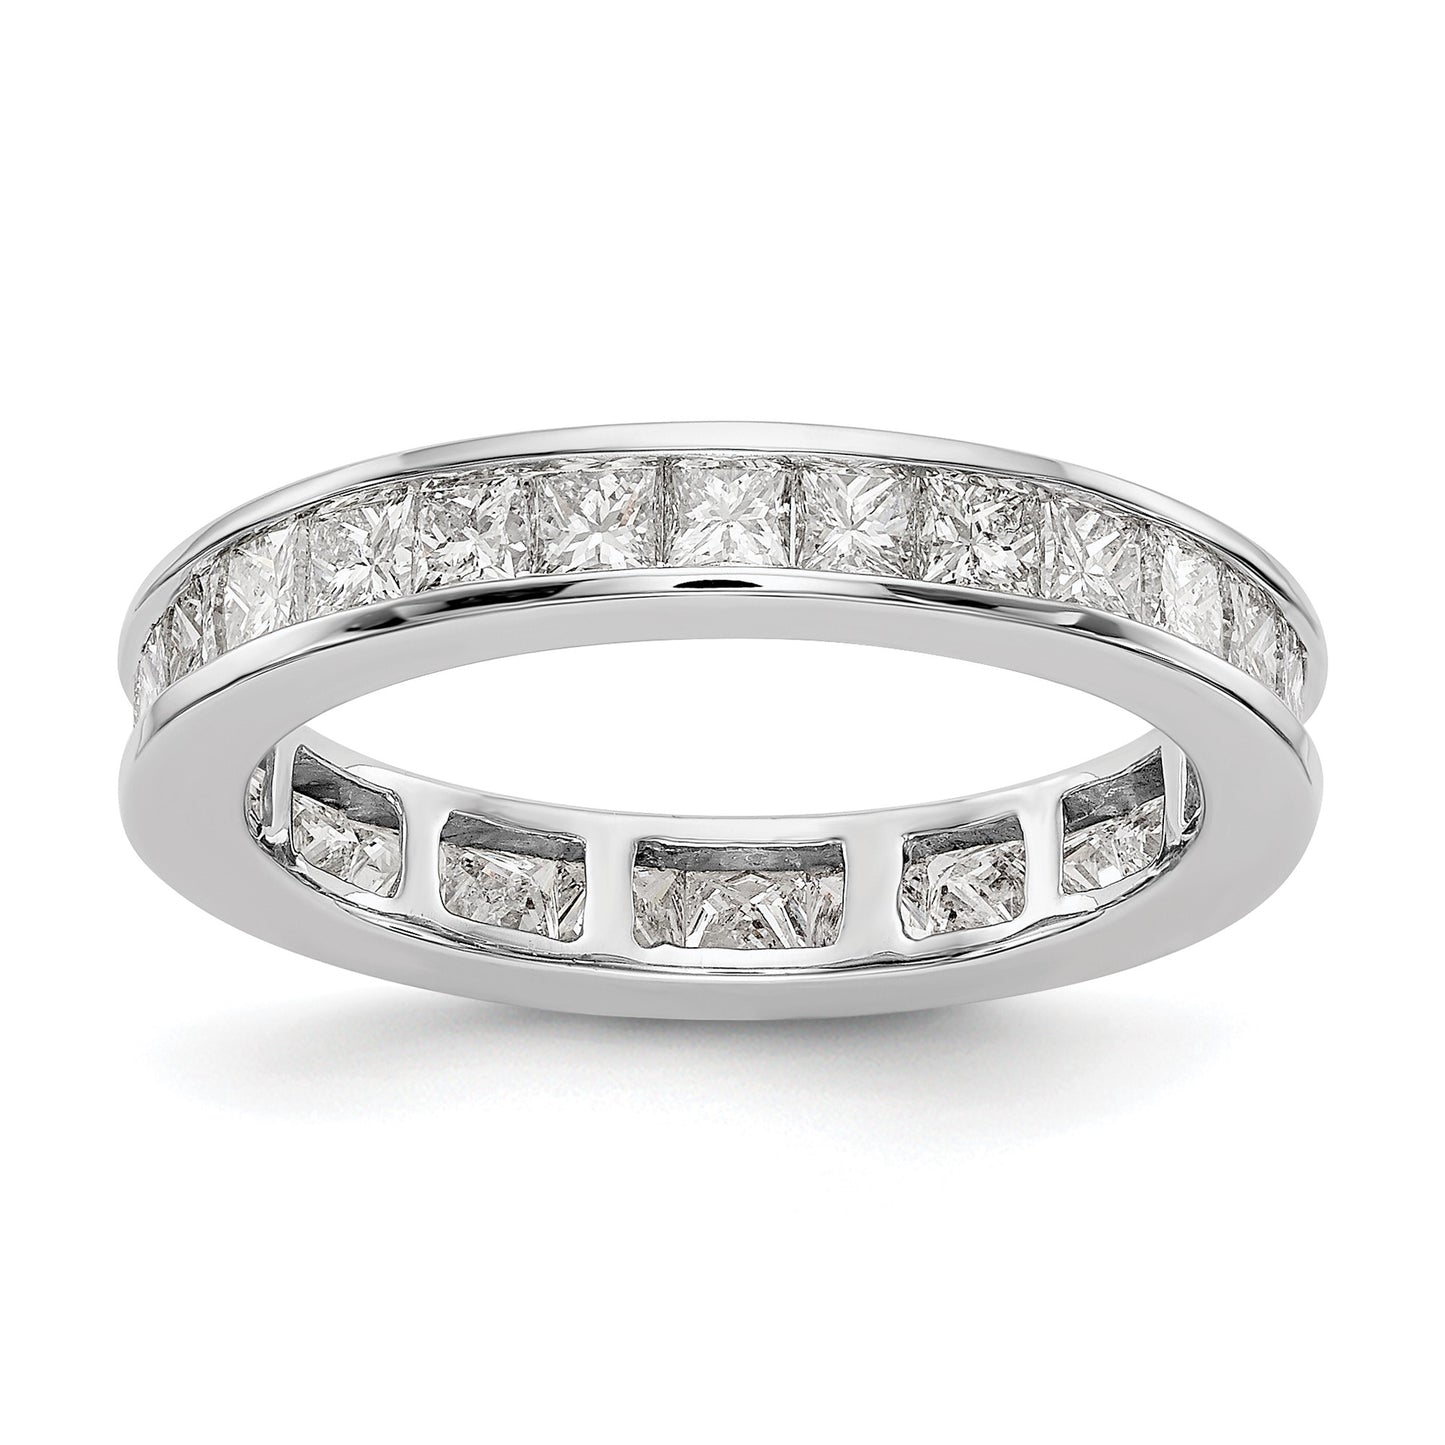 2ct Channel Set Princess Cut Diamond Eternity Wedding Band Ring 14k White Gold